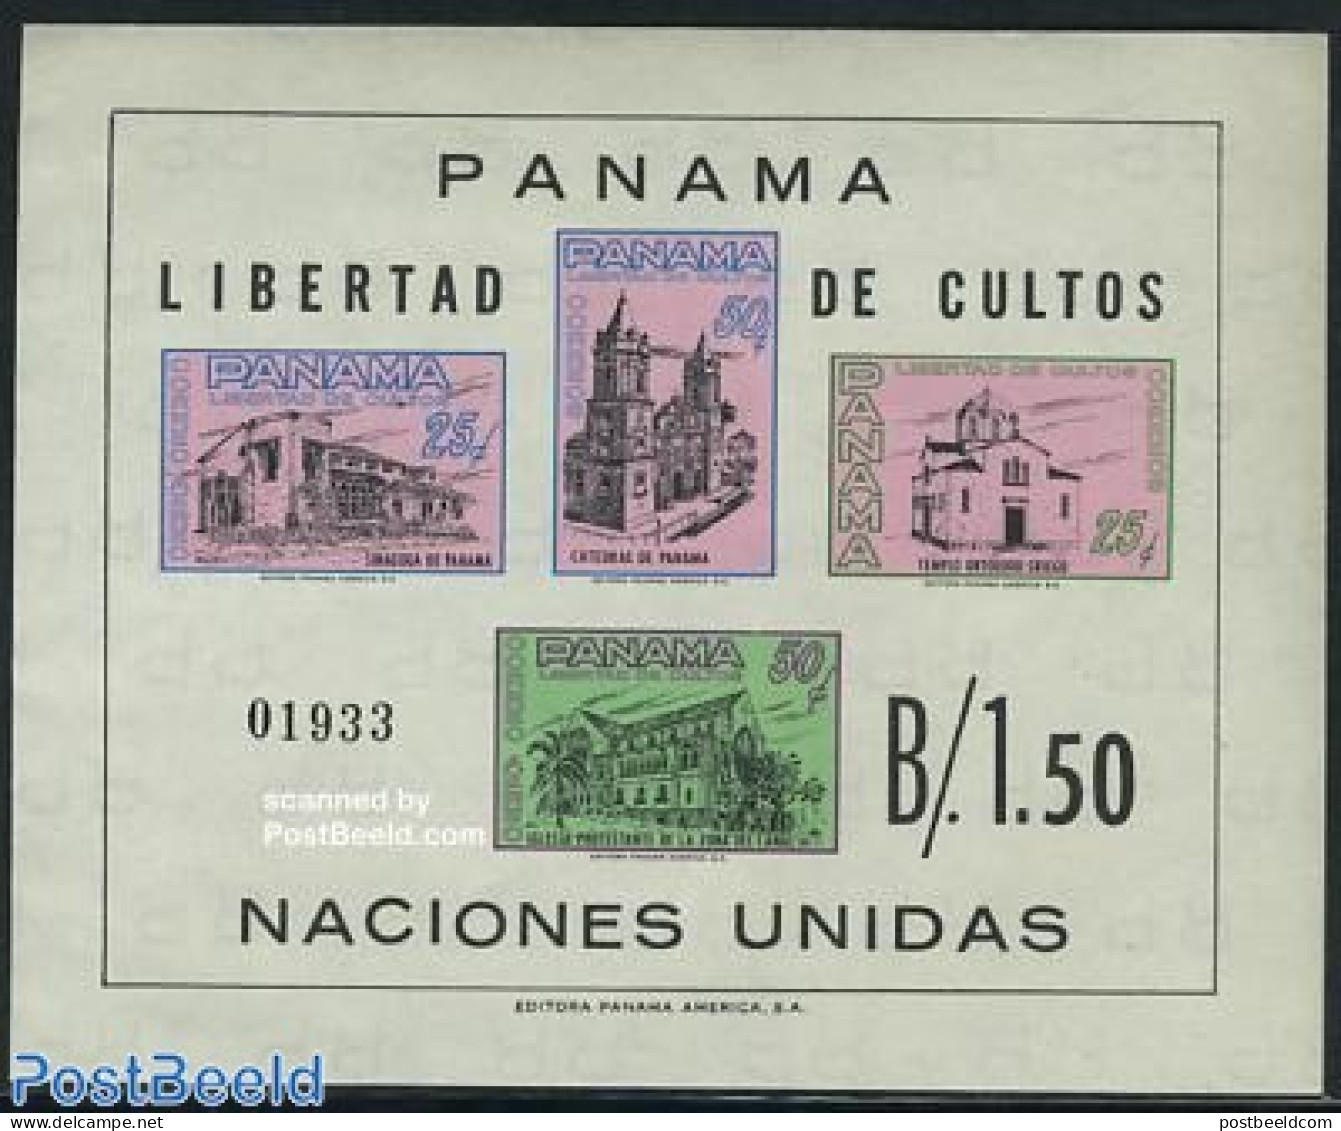 Panama 1962 Freedom Of Religion S/s, Mint NH - Panamá